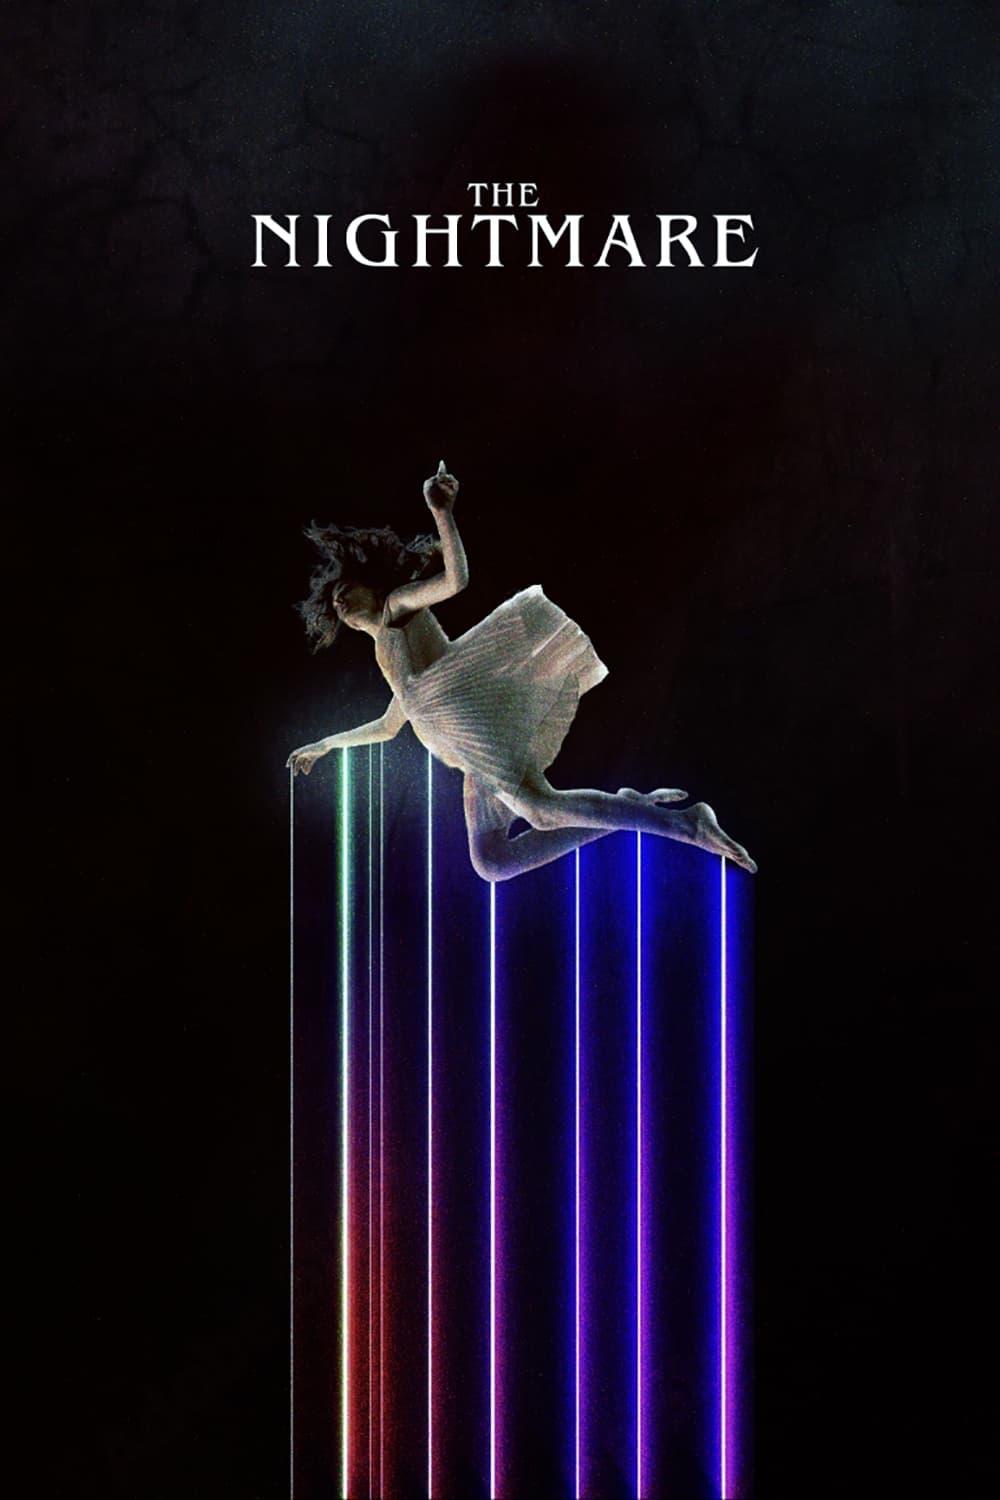 NightMare poster